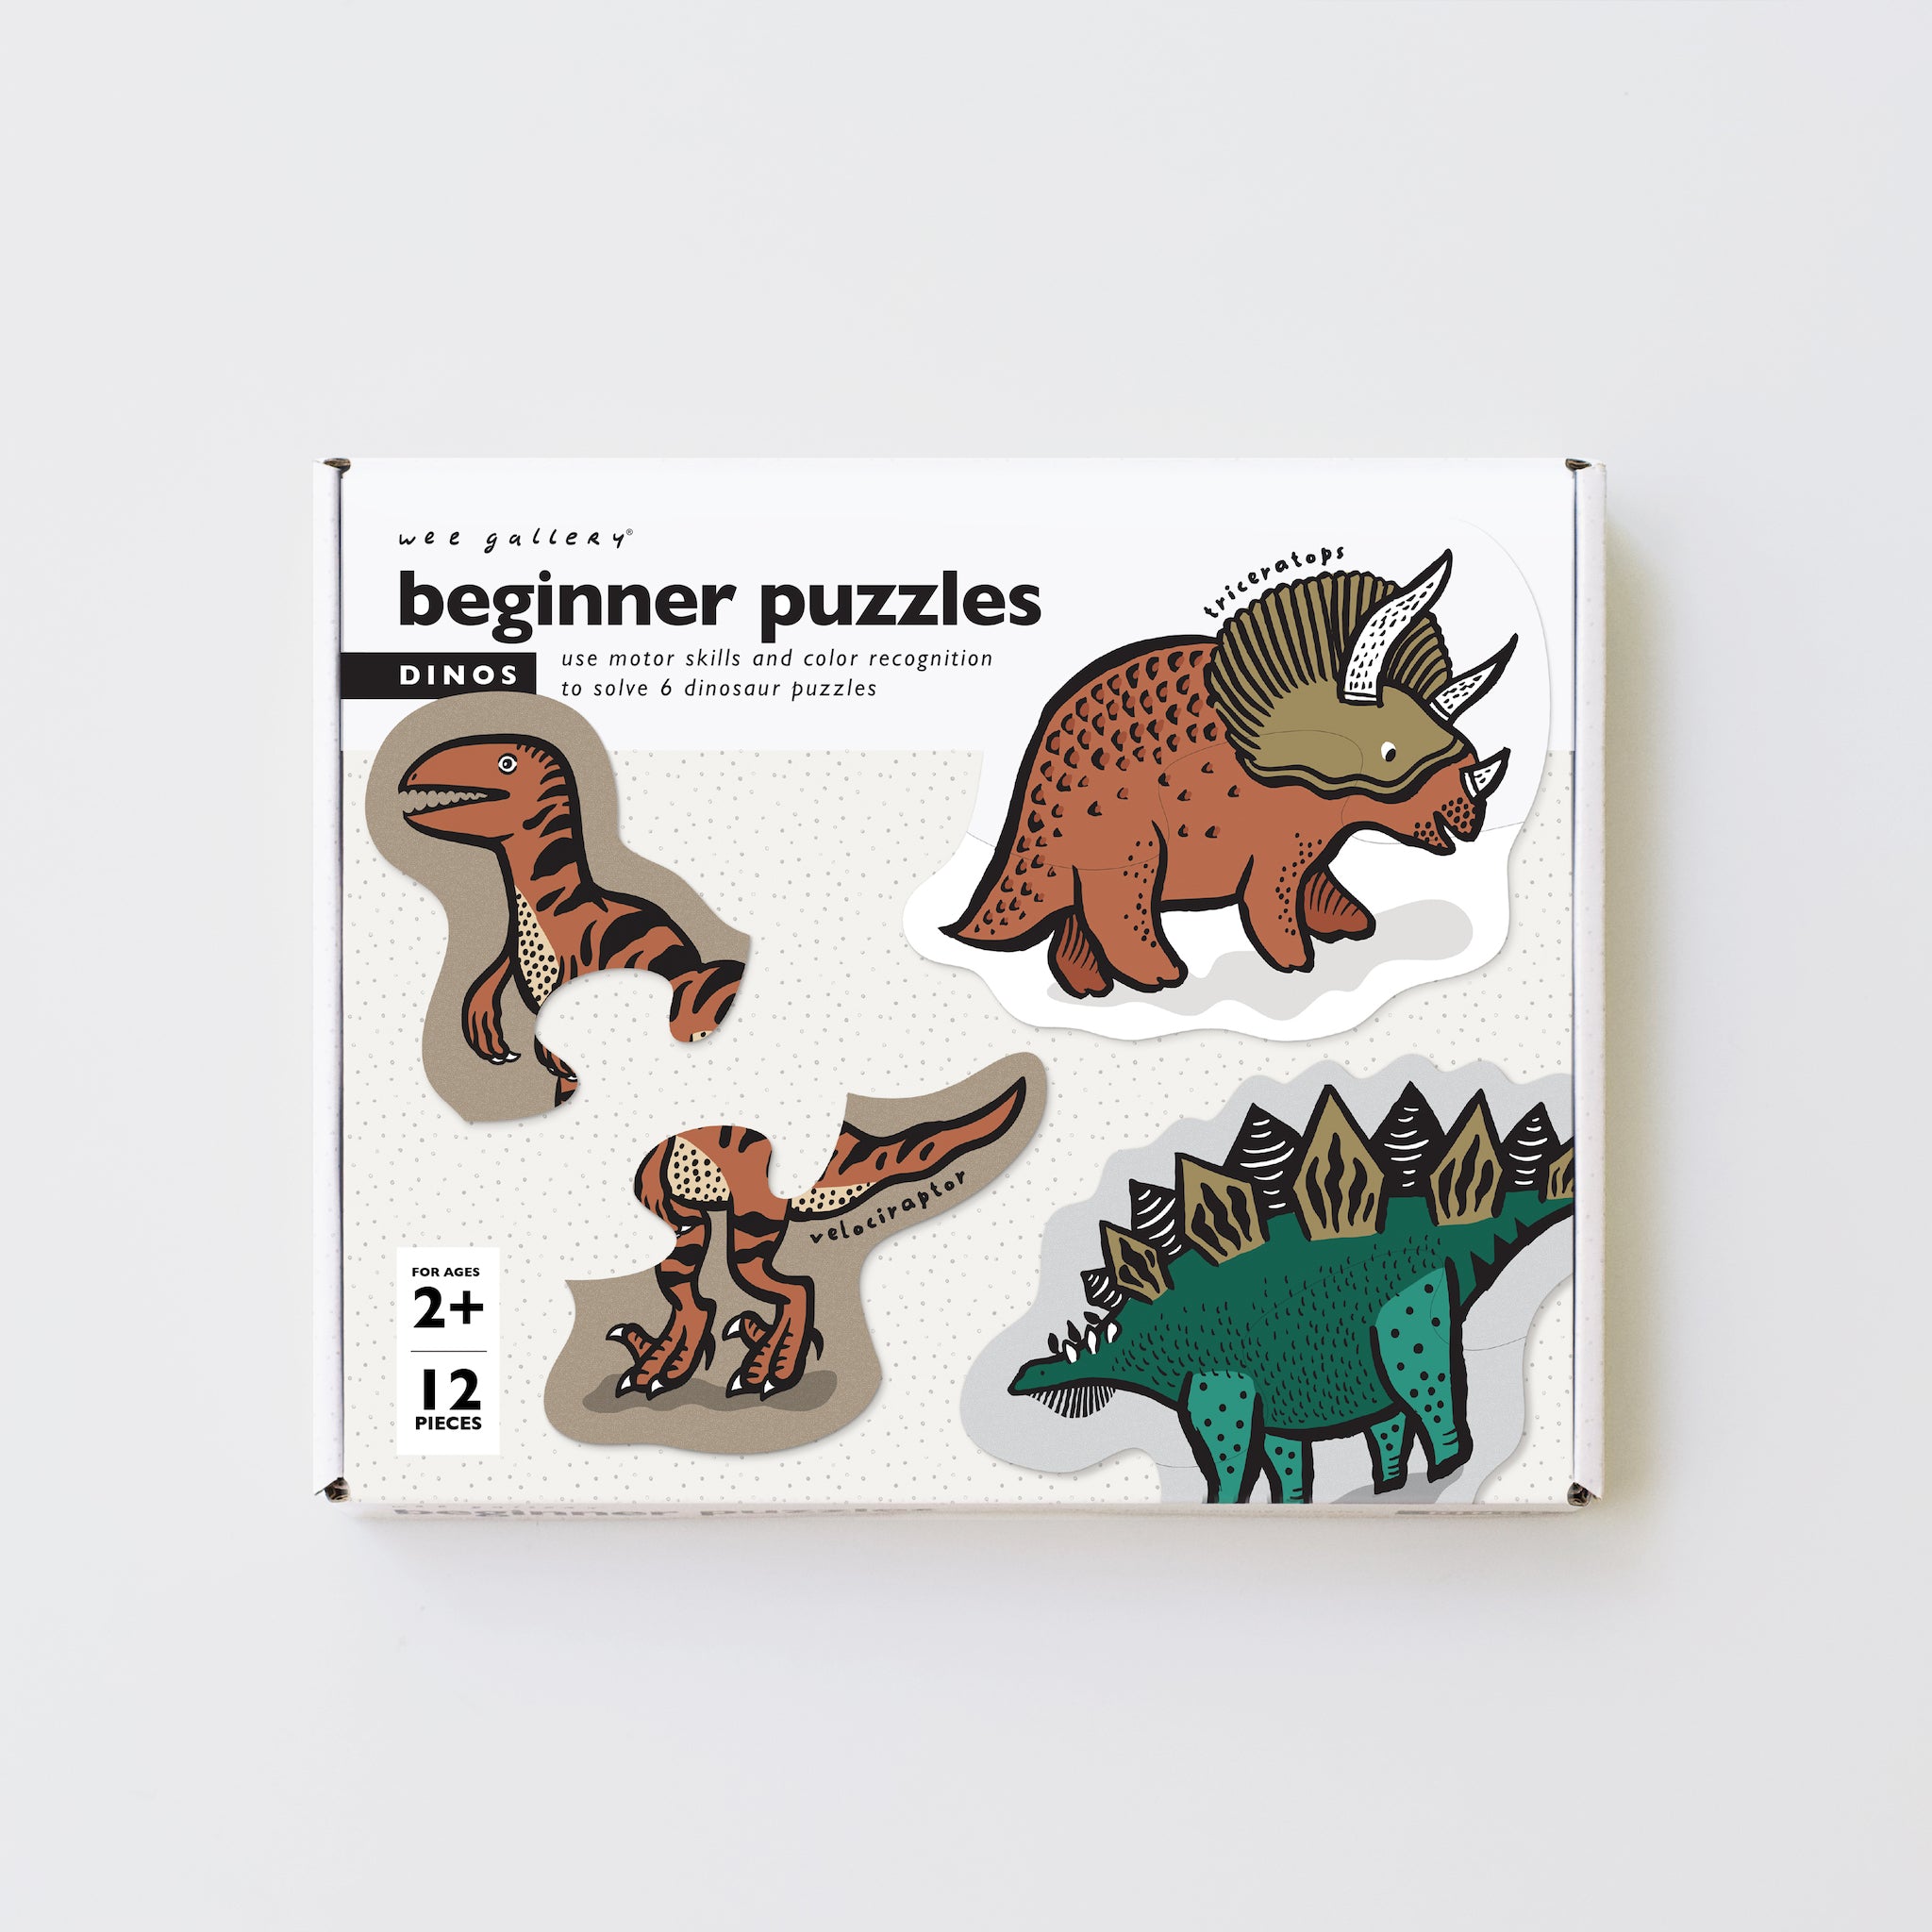 Wee Gallery Beginner Puzzles - Pets